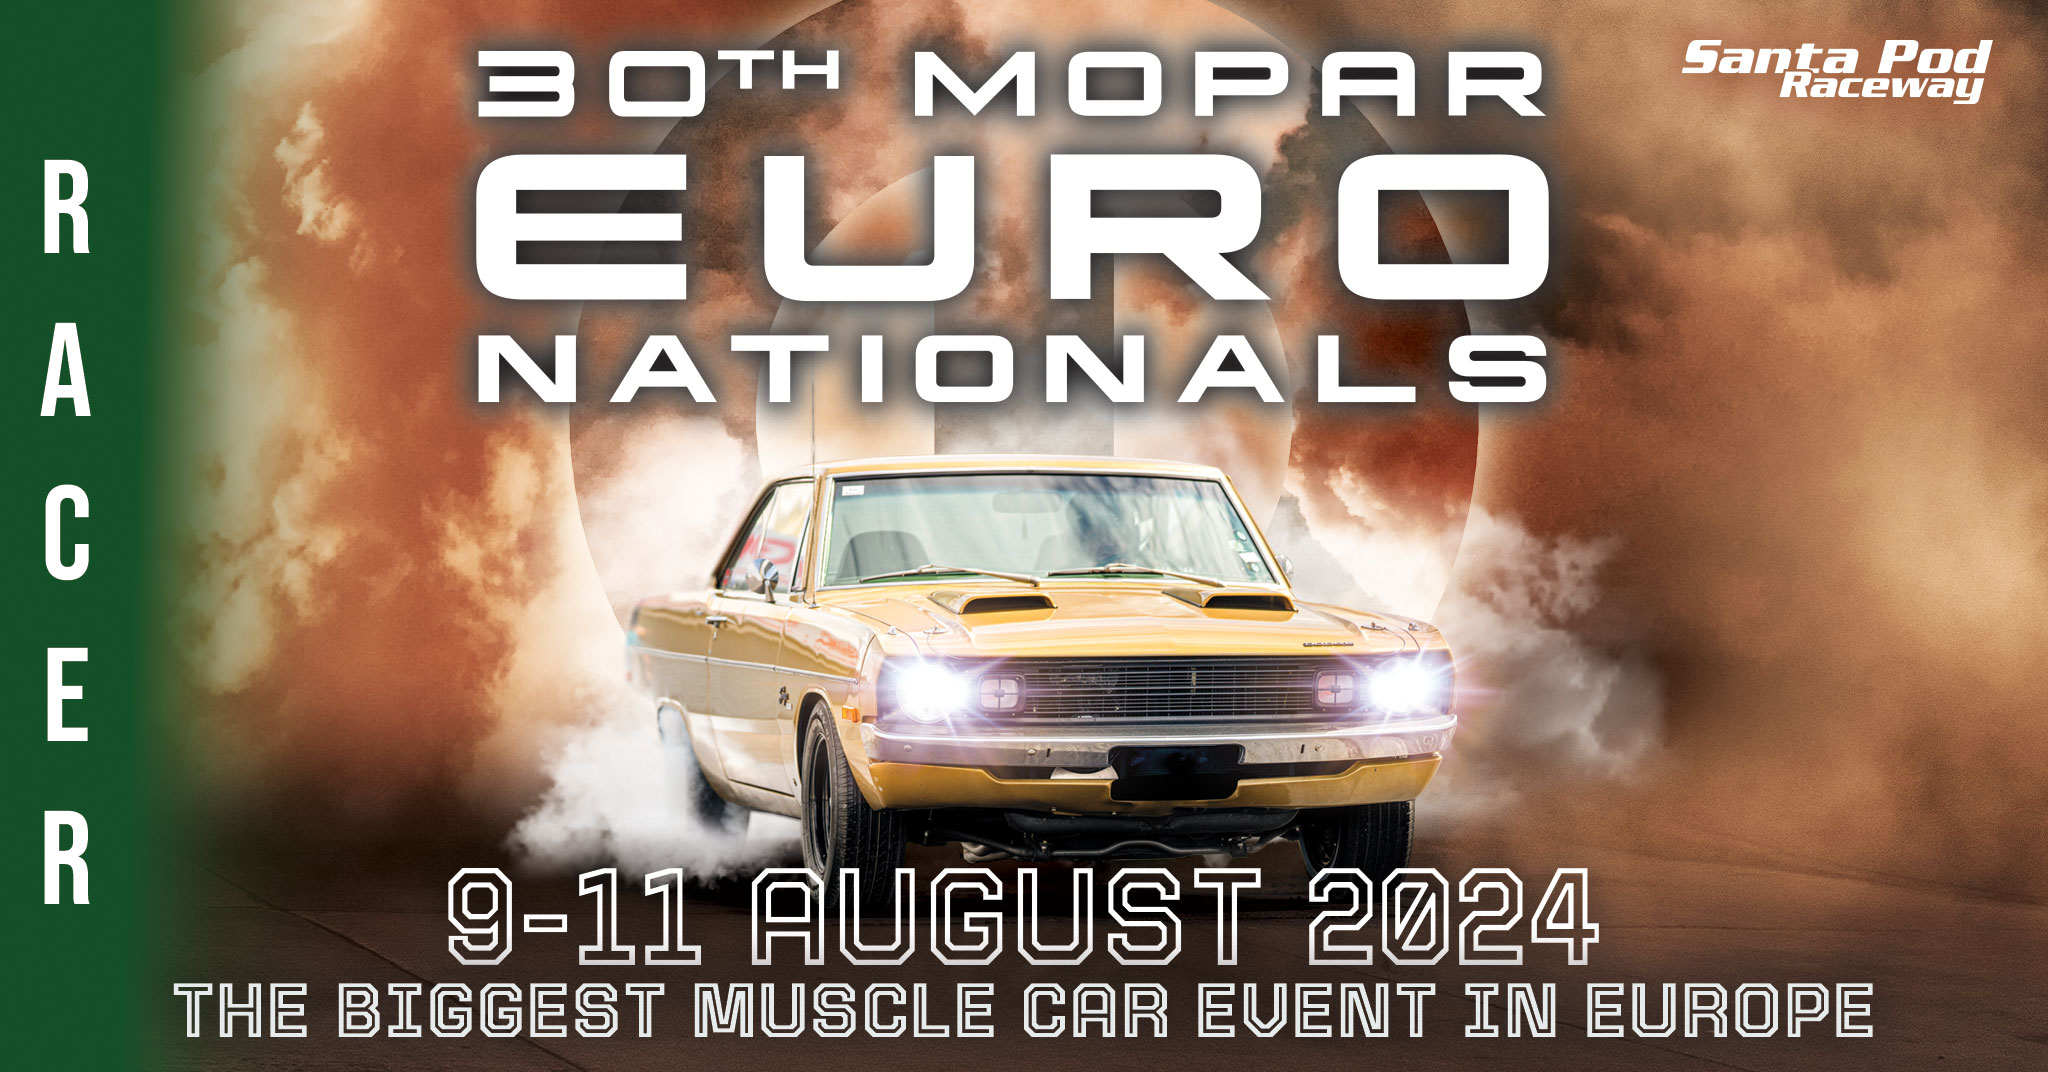 Mopar Euro Nationals Race Entry Santa Pod Raceway 09 August 2024